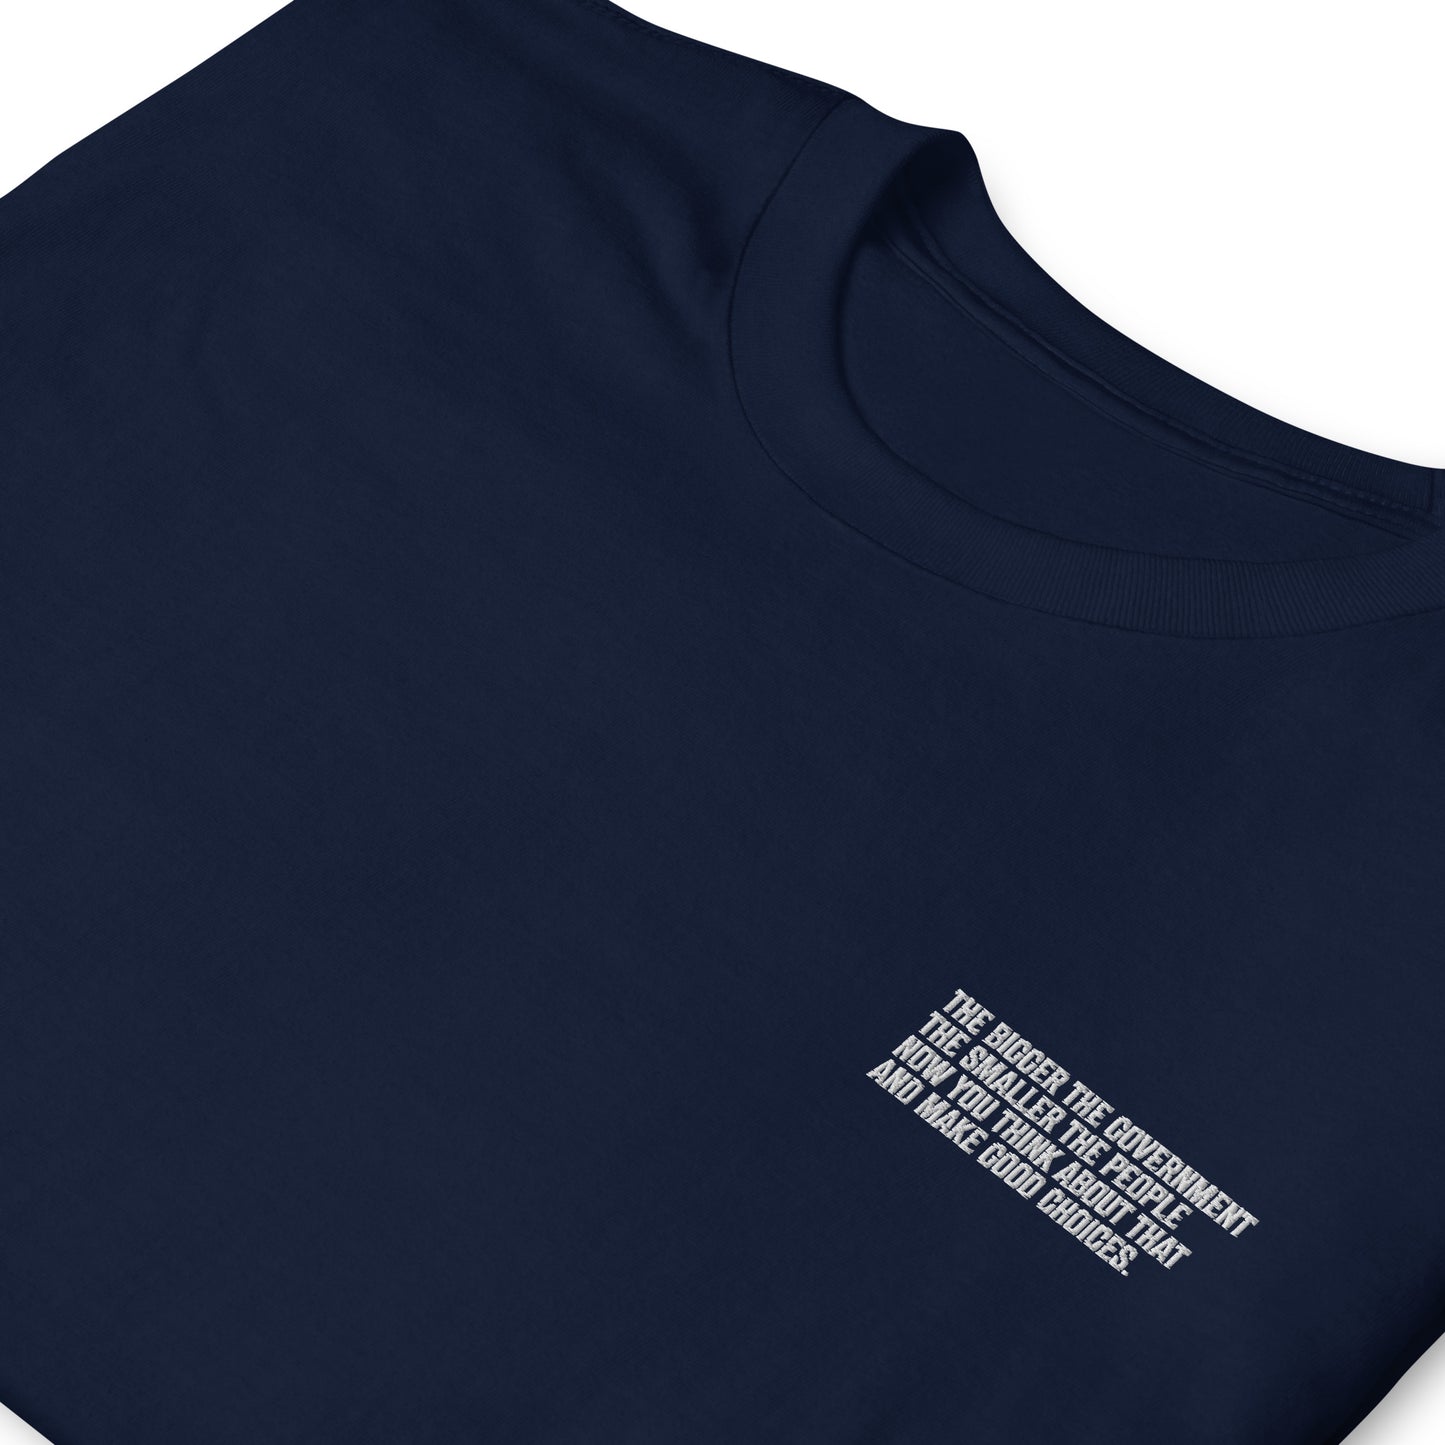 CHOICES Short-Sleeve Unisex T-Shirt